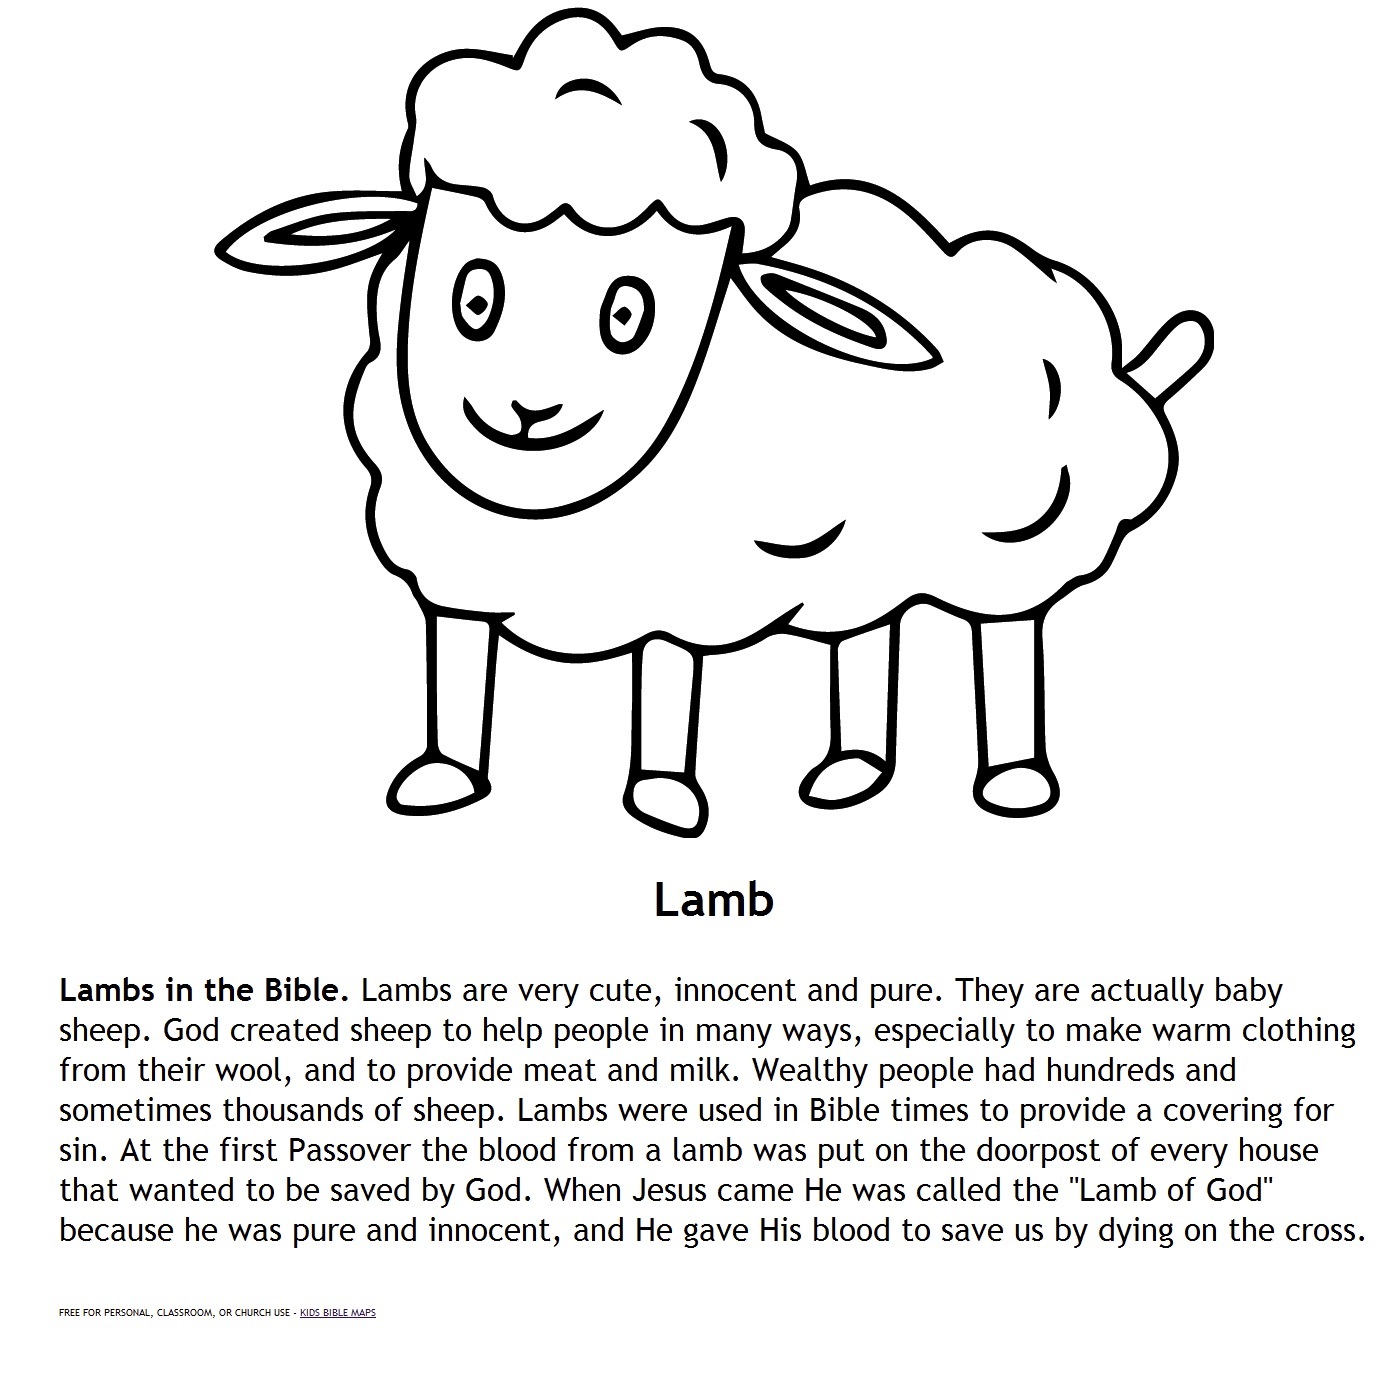 Lamb - The Children's Teaching Bible